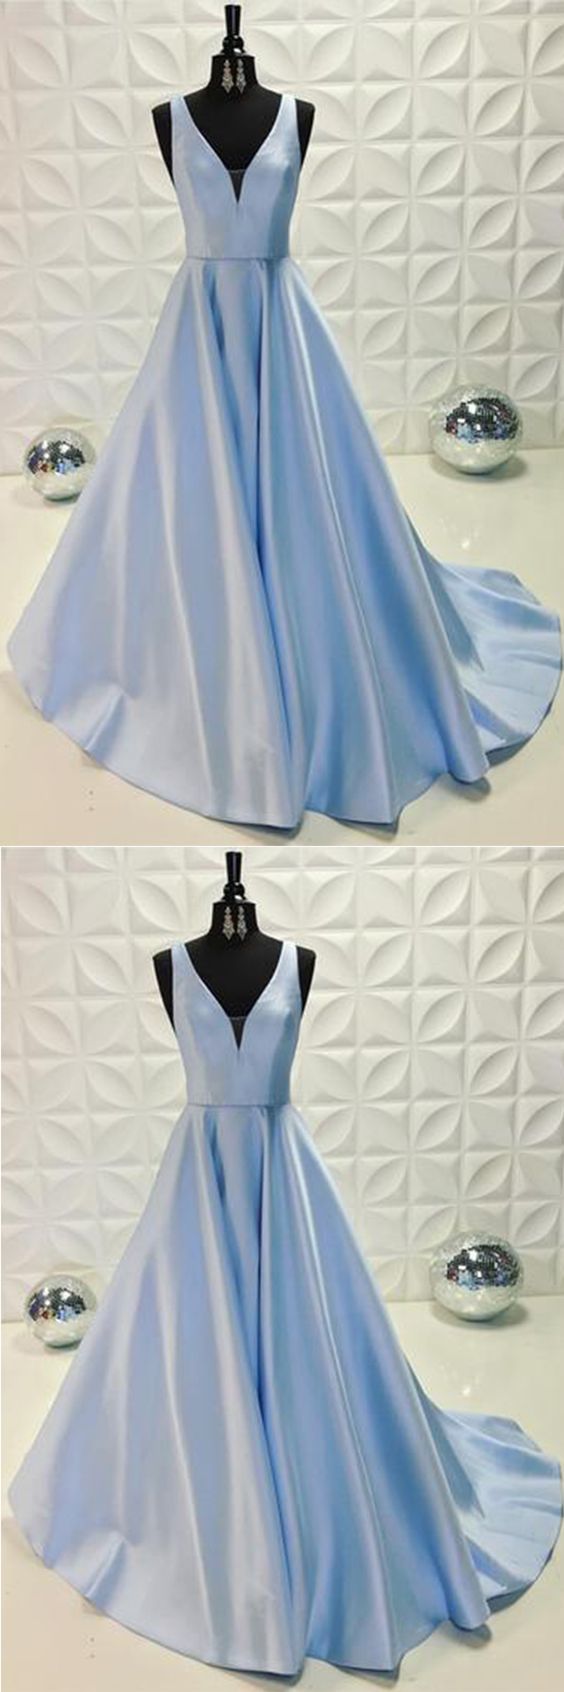 Simple Sky Blue Evening Dress, Satin V Neck Prom Dress, Long Halter Prom Dress, Long Handmade Party Dress